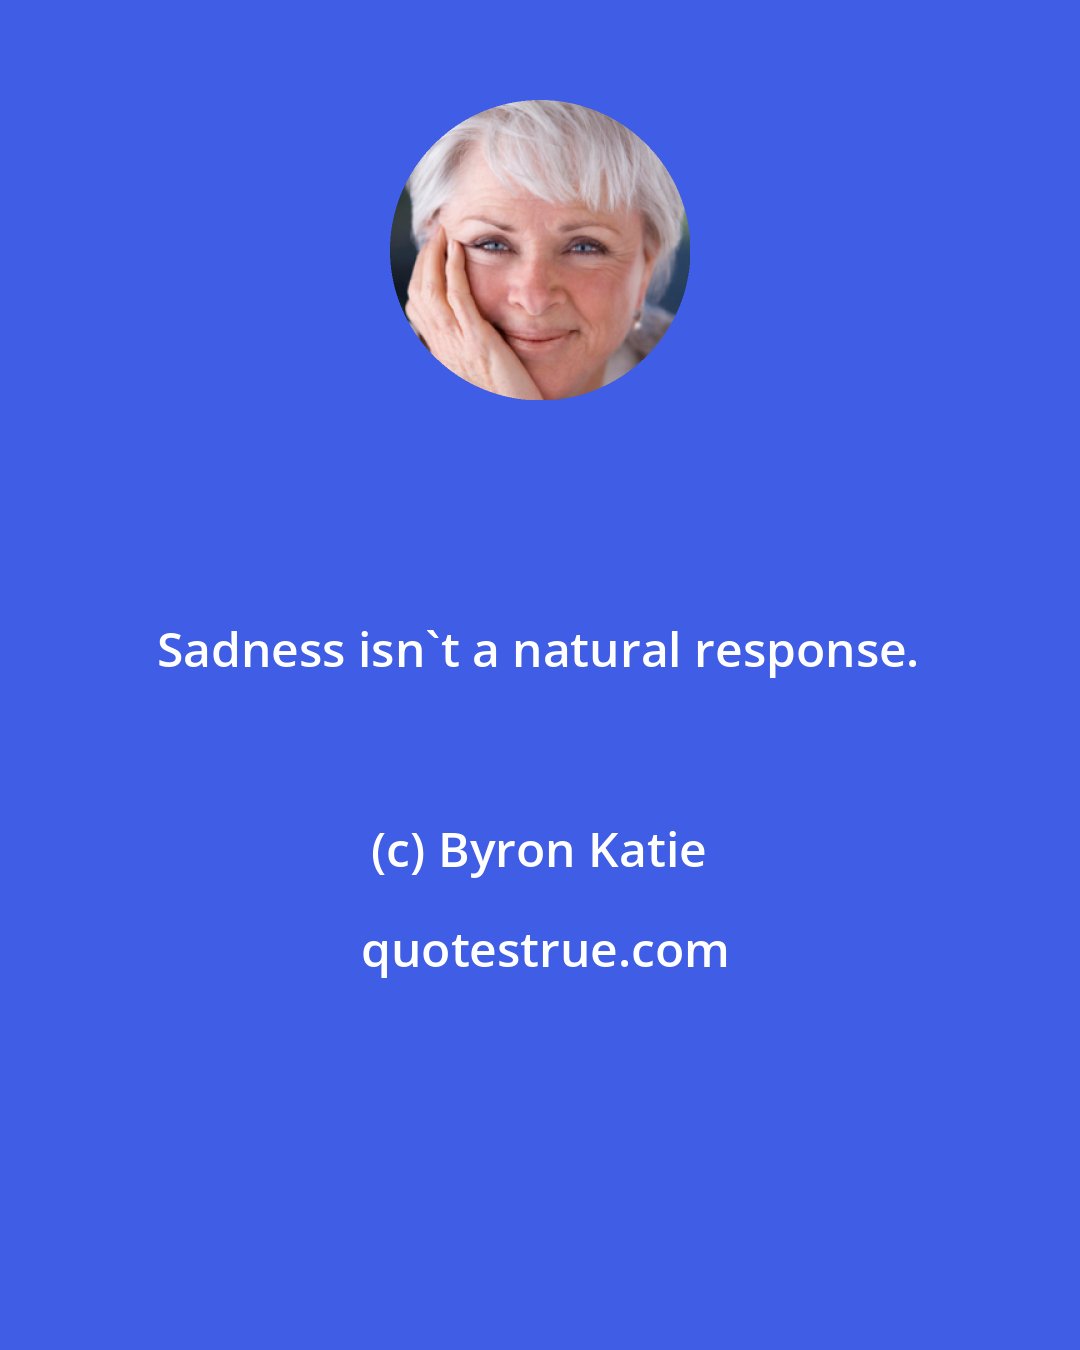 Byron Katie: Sadness isn't a natural response.